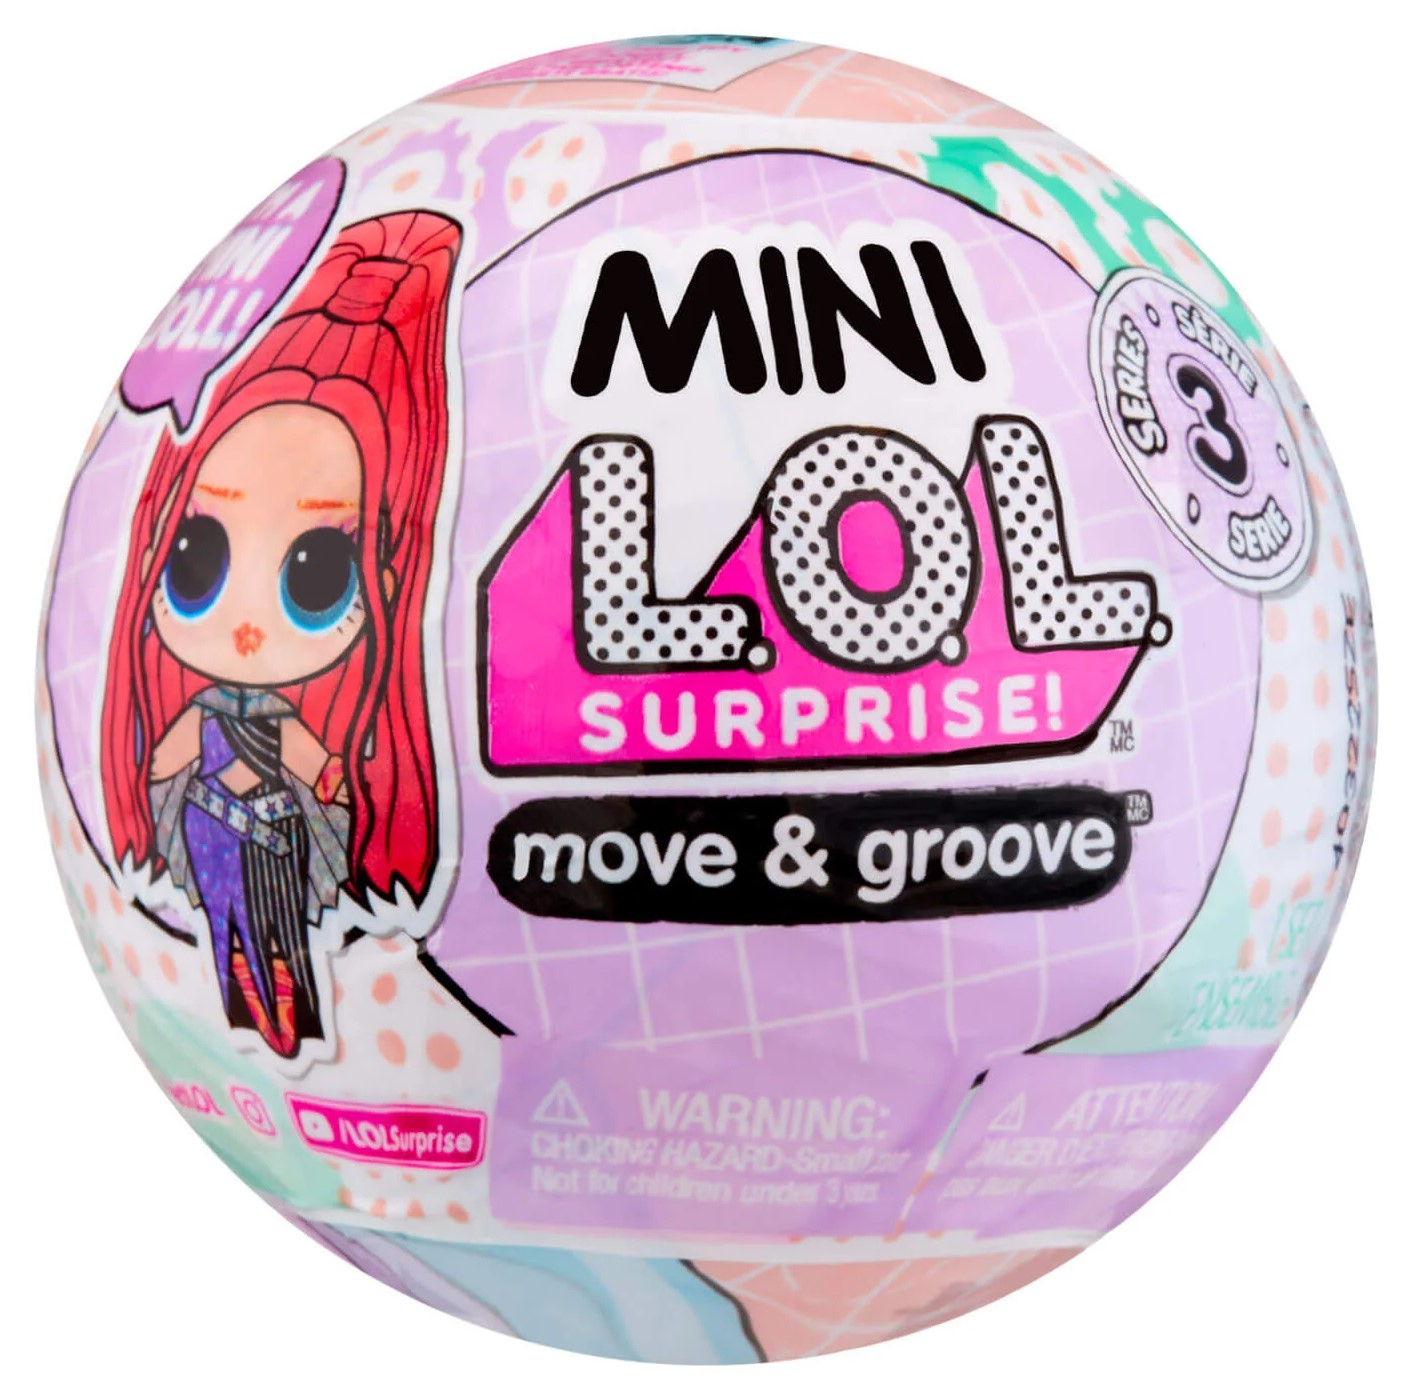 LOL Surprise OMG Swim “Paradise VIP” Doll Pink Hair